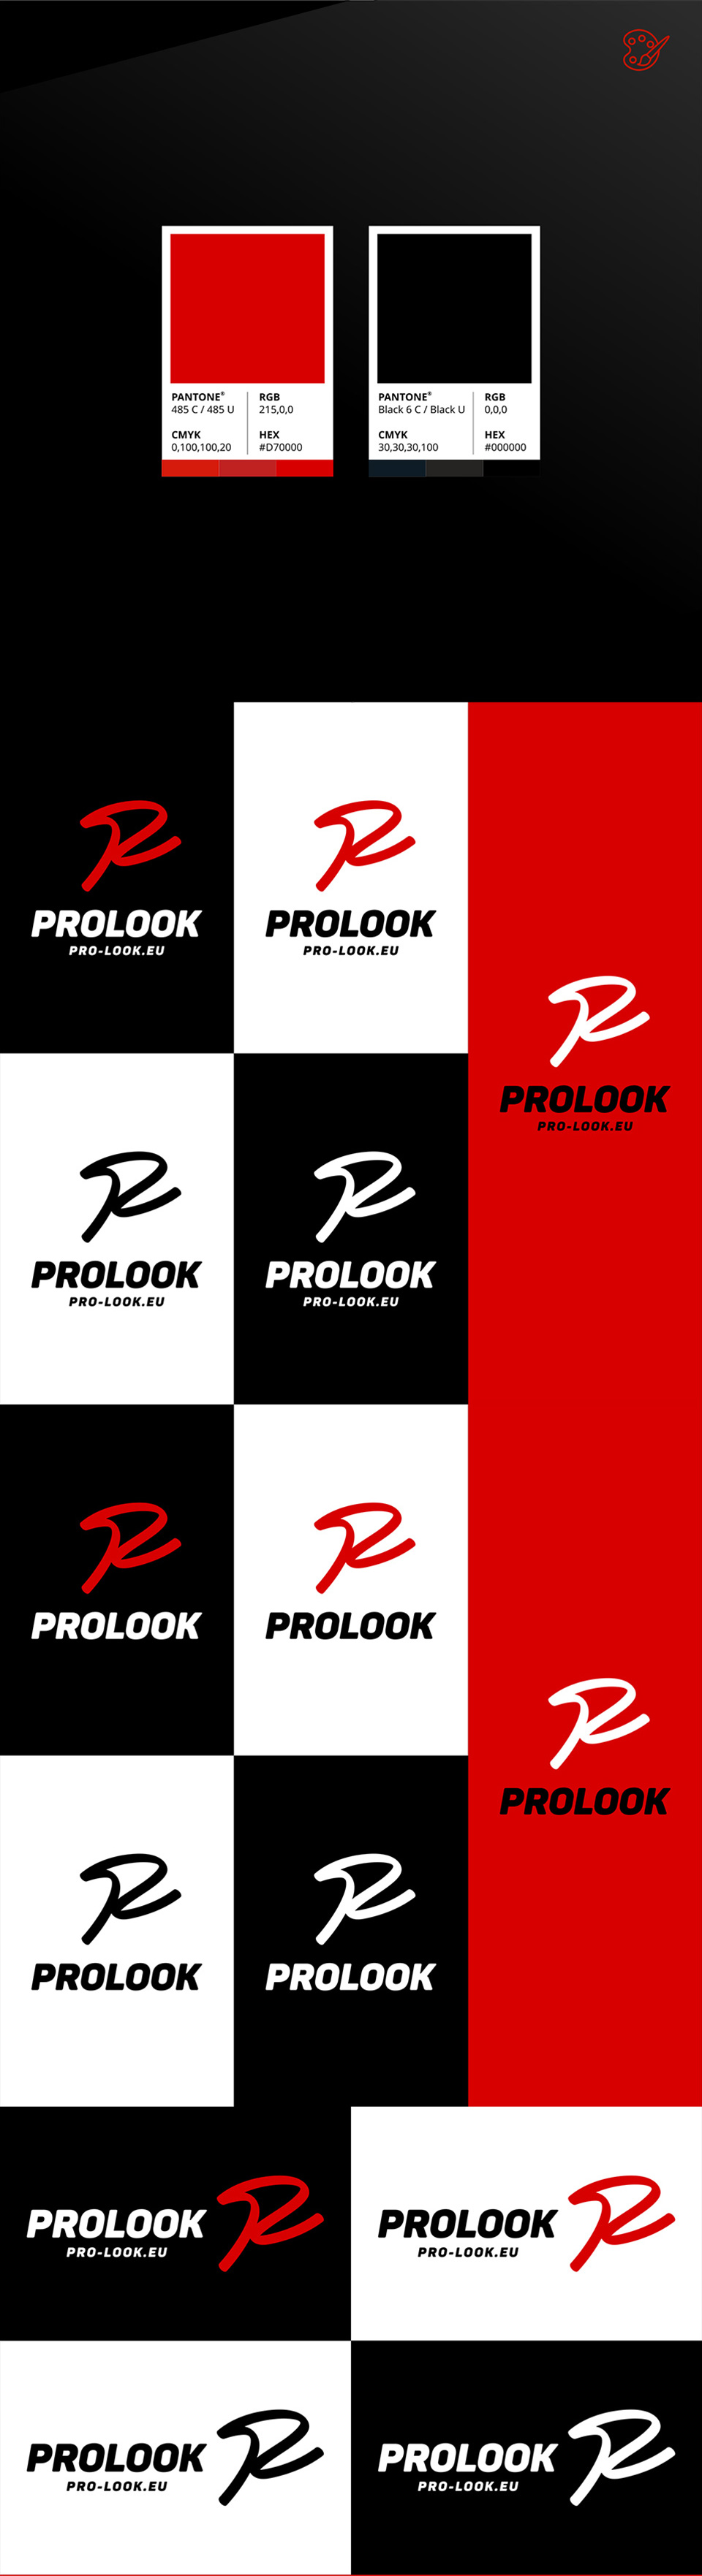 prolook-logo-2